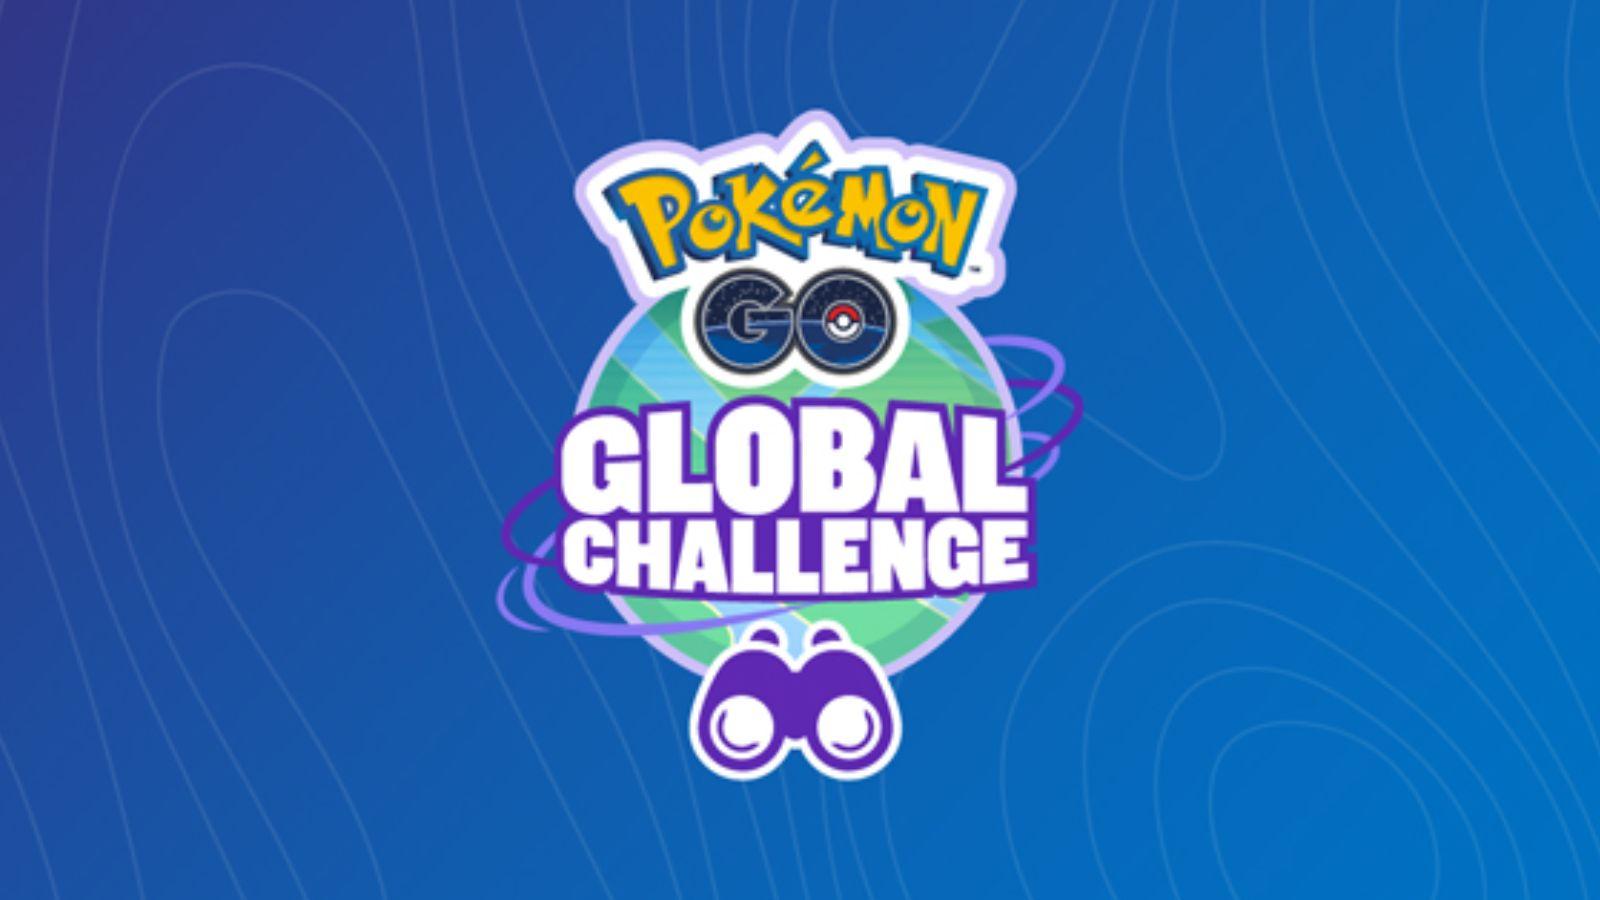 Pokemon Go global challenges